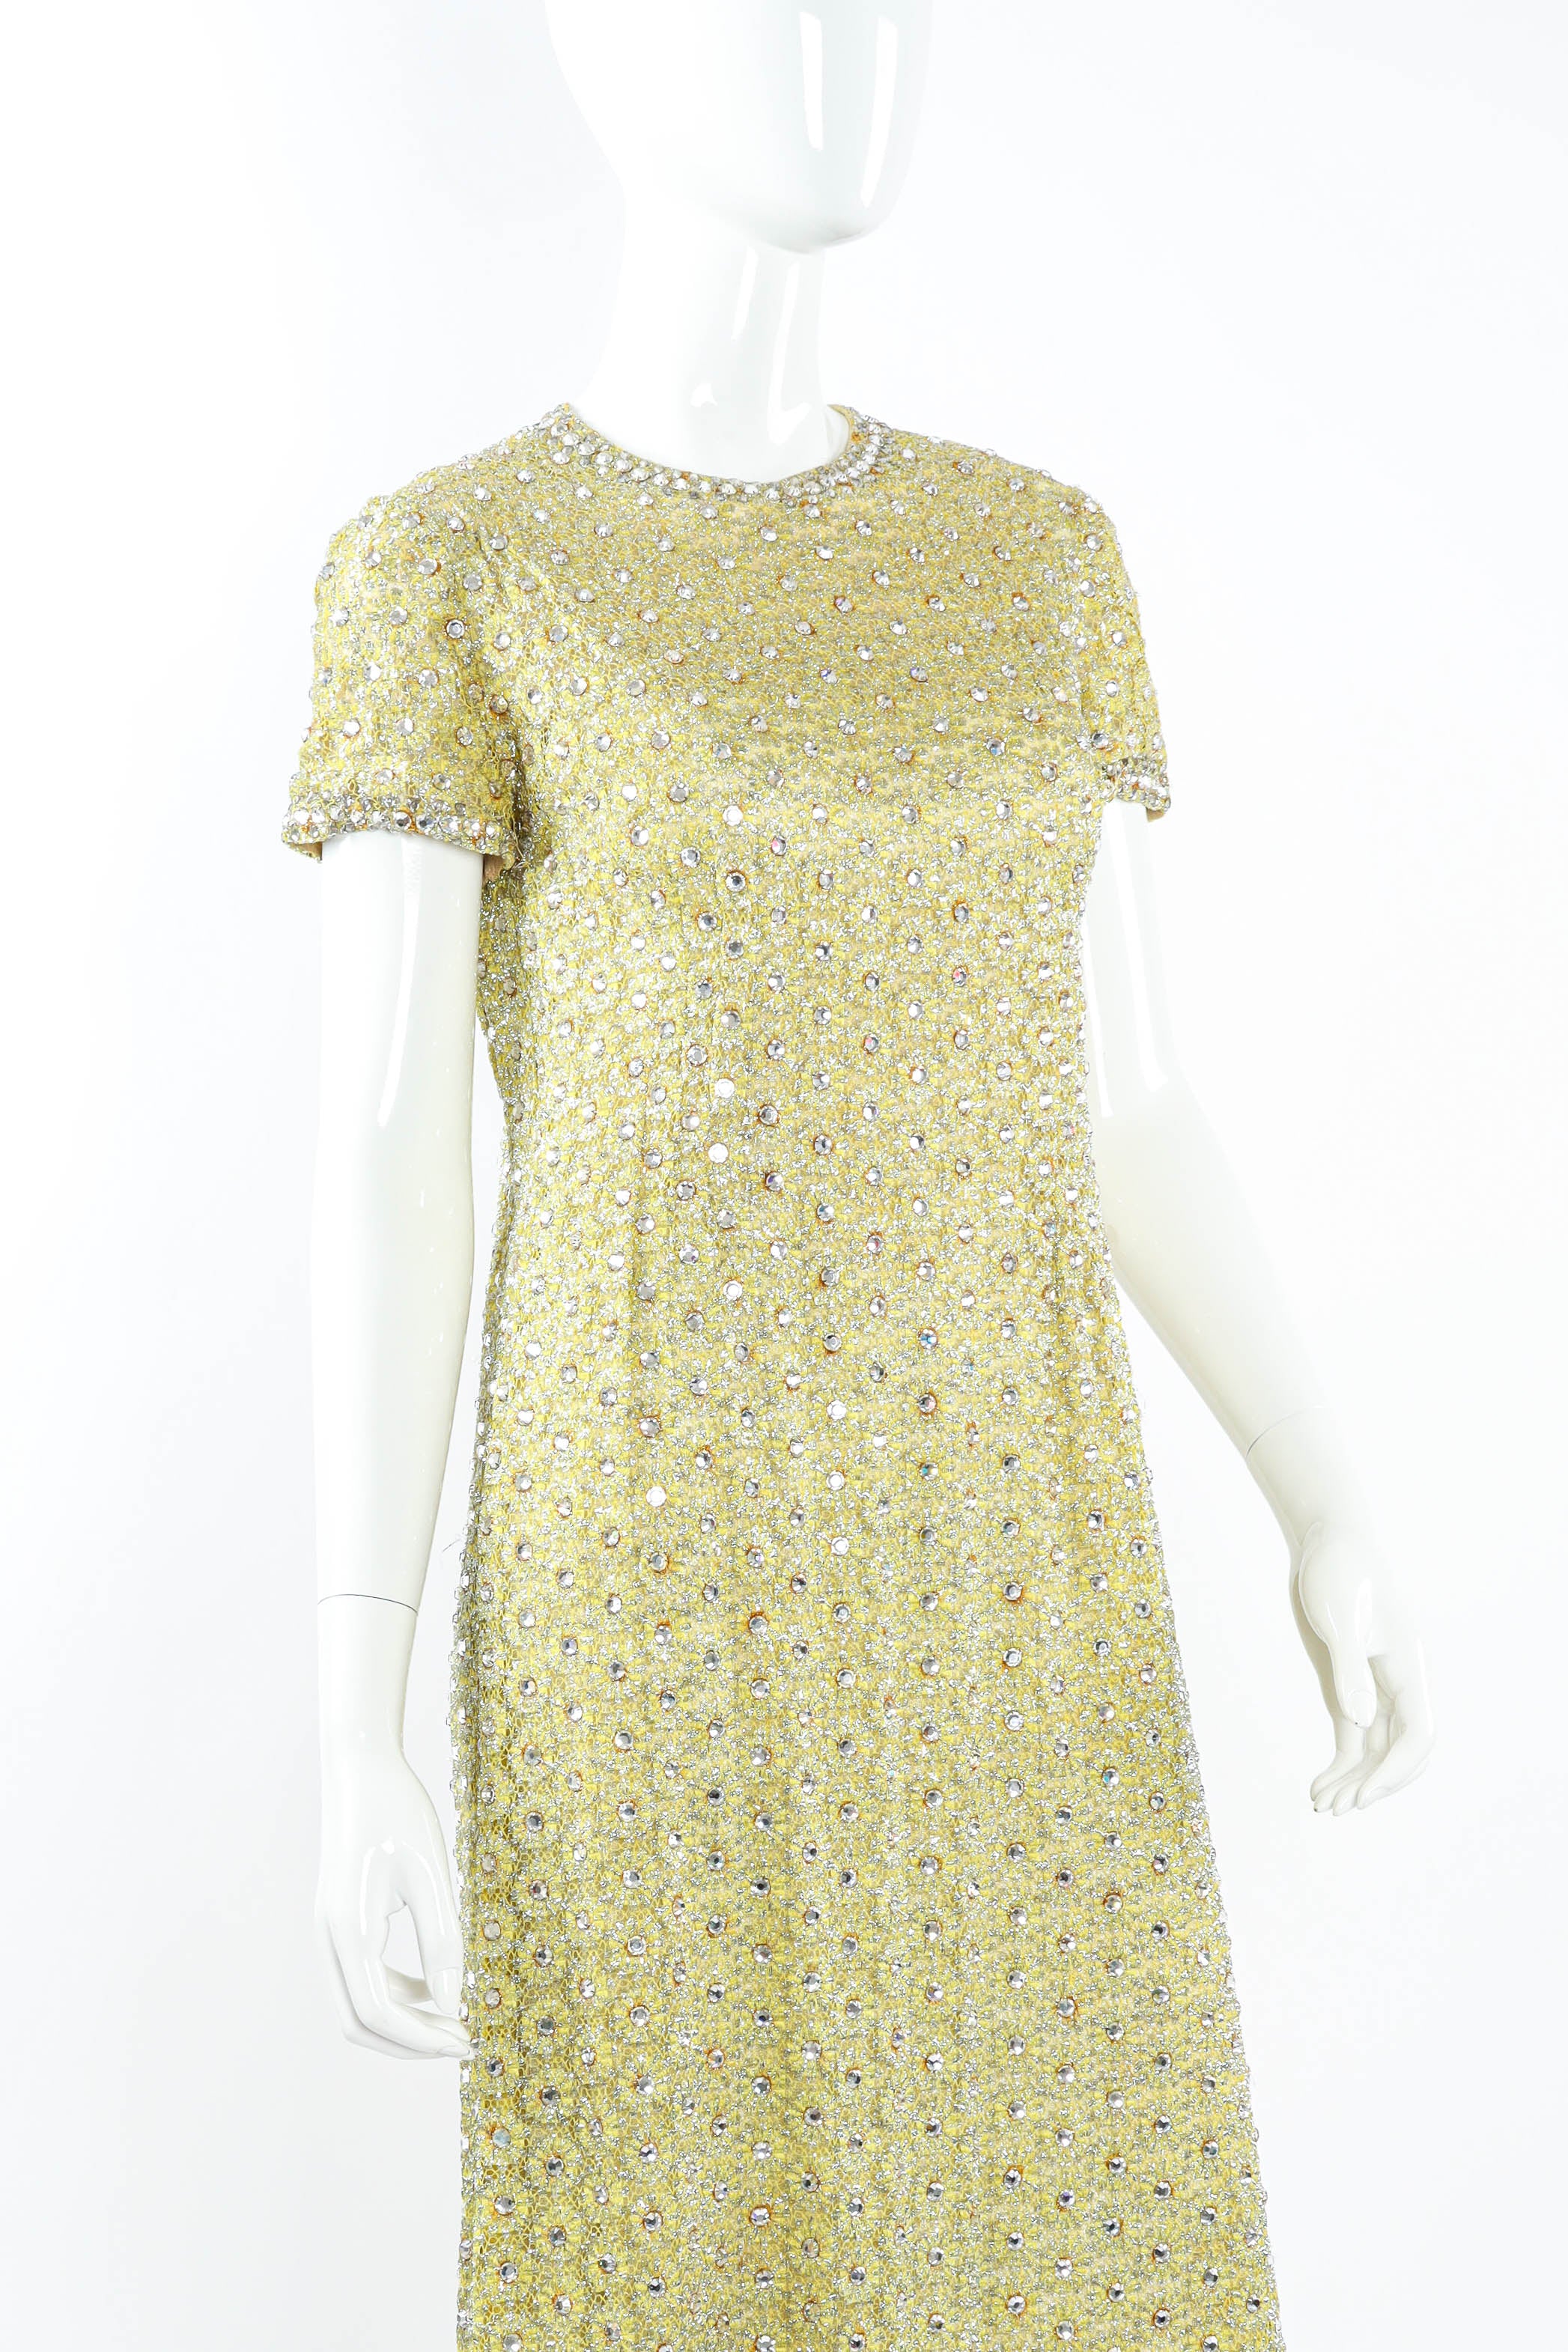 Vintage Bonwit Teller Rhinestone Dotted Dress mannequin close up  @ Recess LA